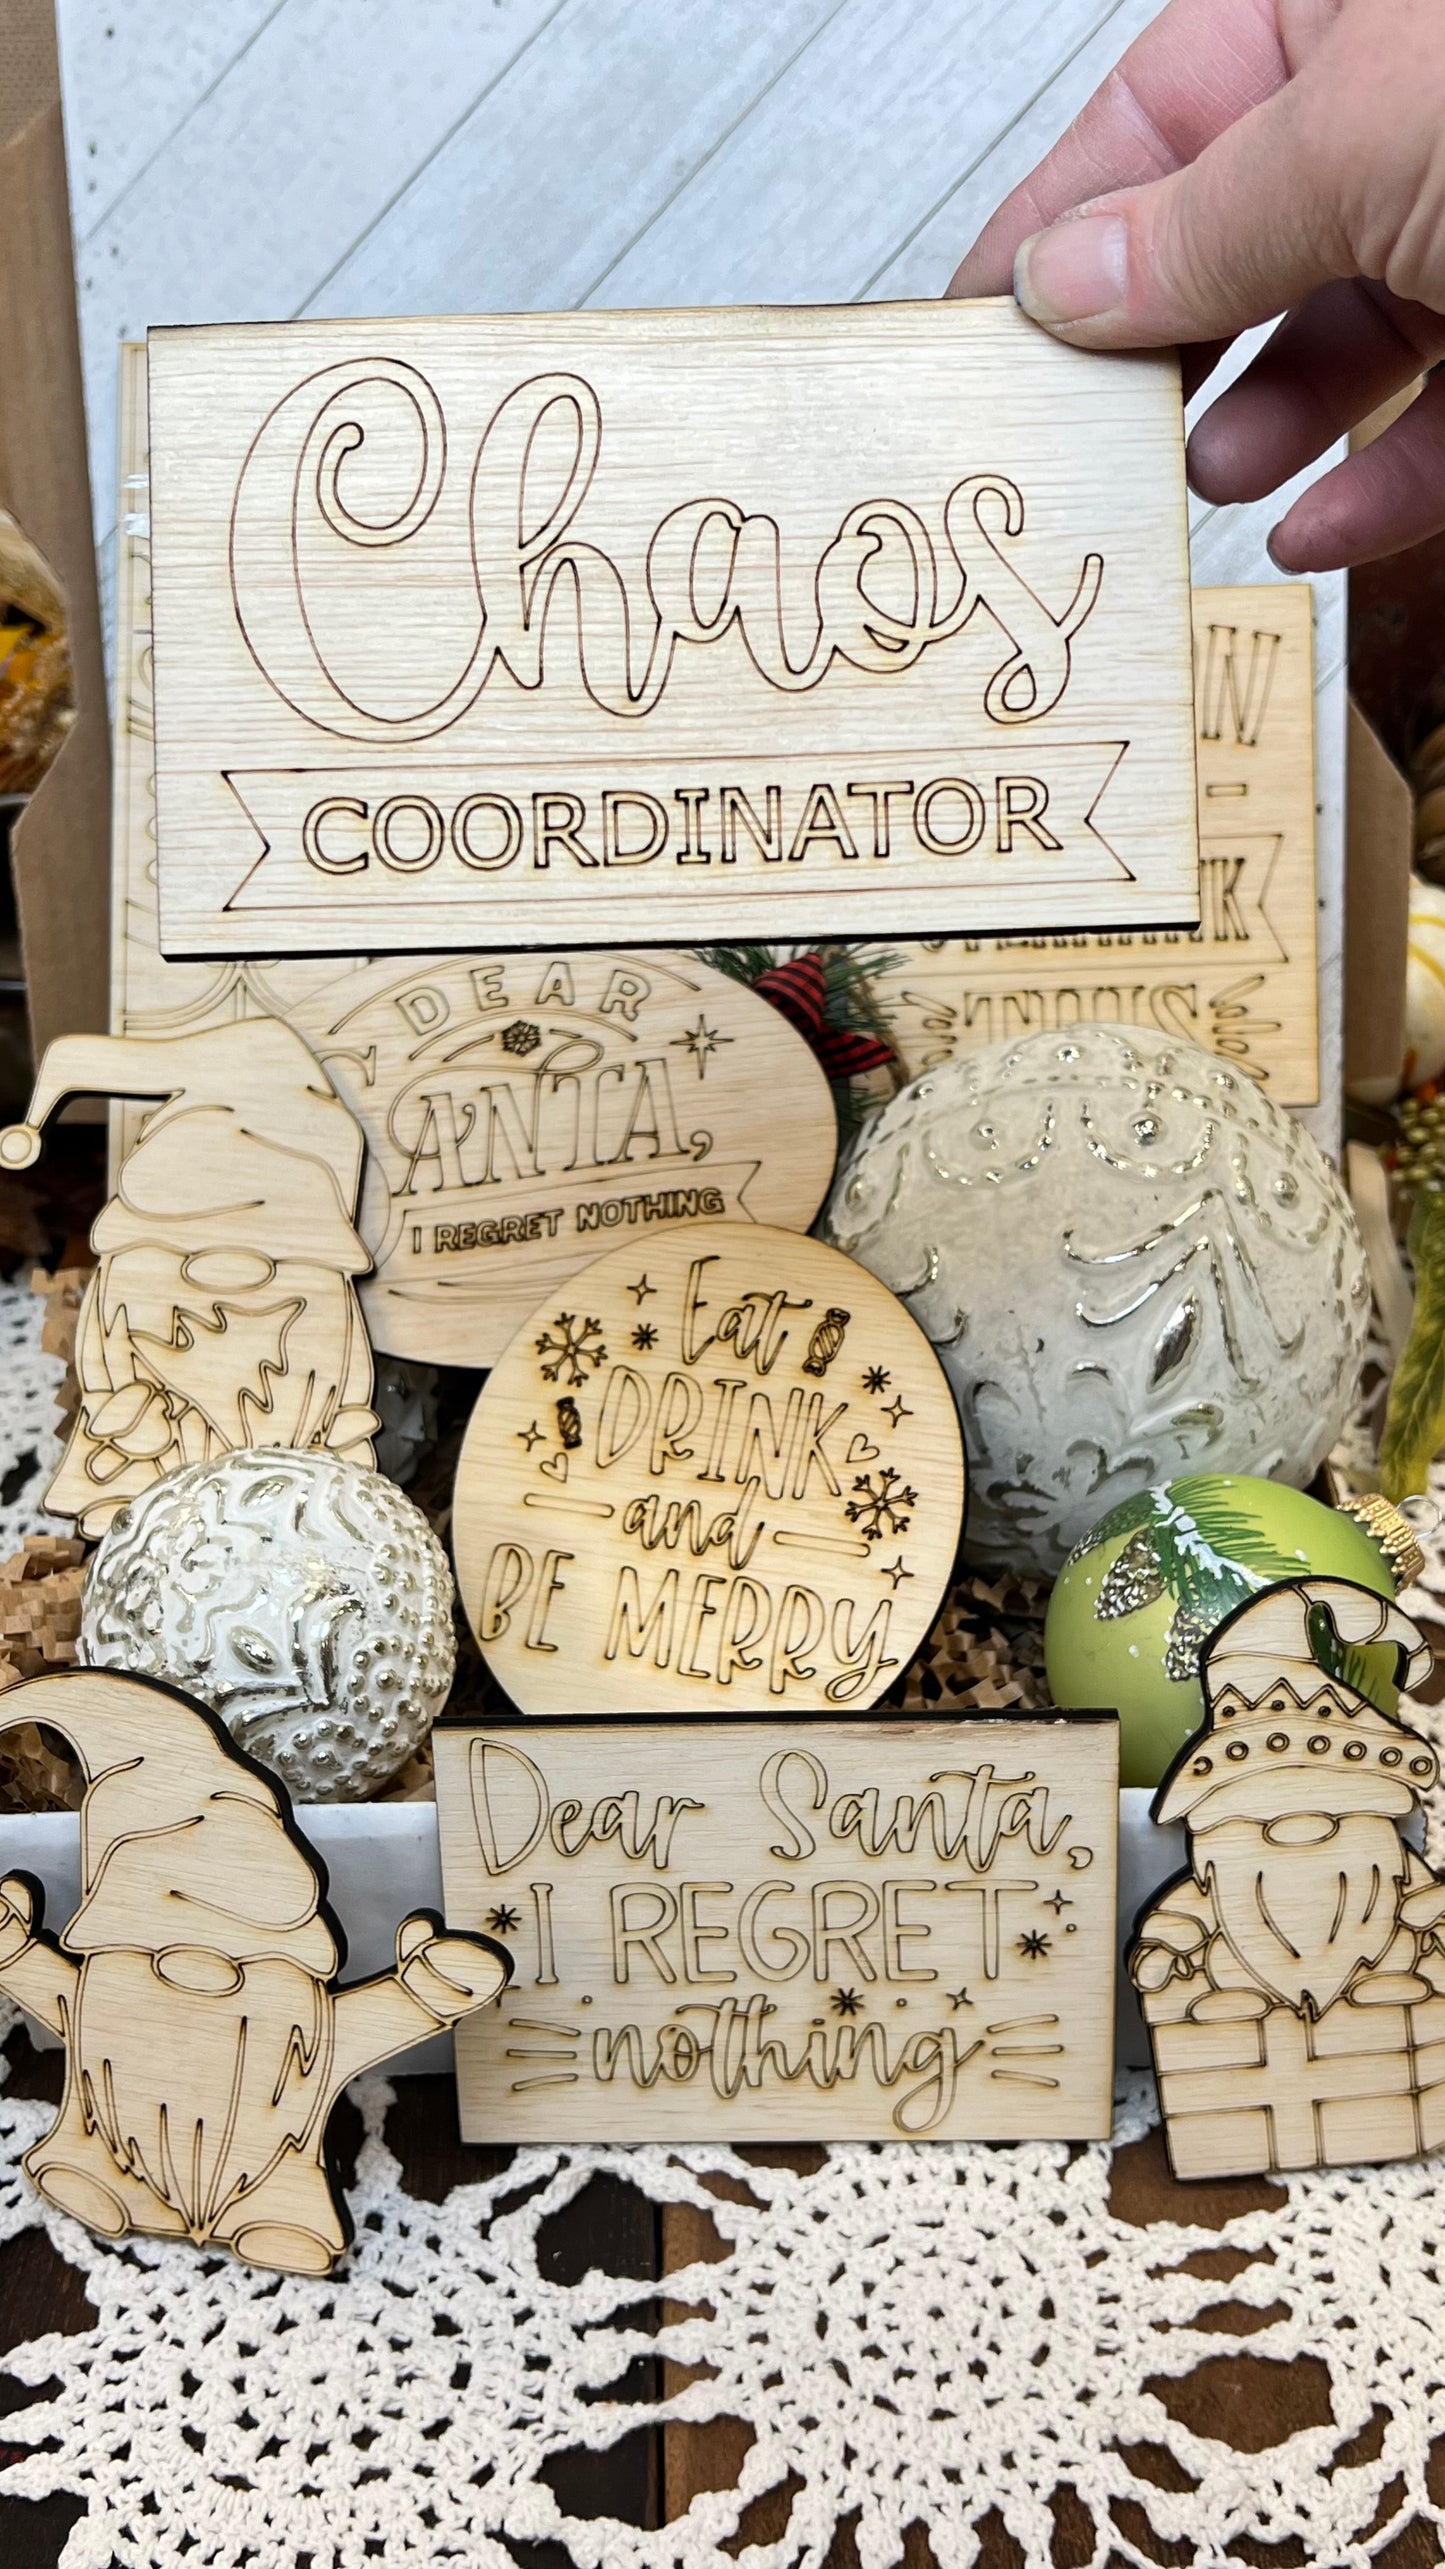 Chaos Coordinator Christmas Themed Tiered Tray Display